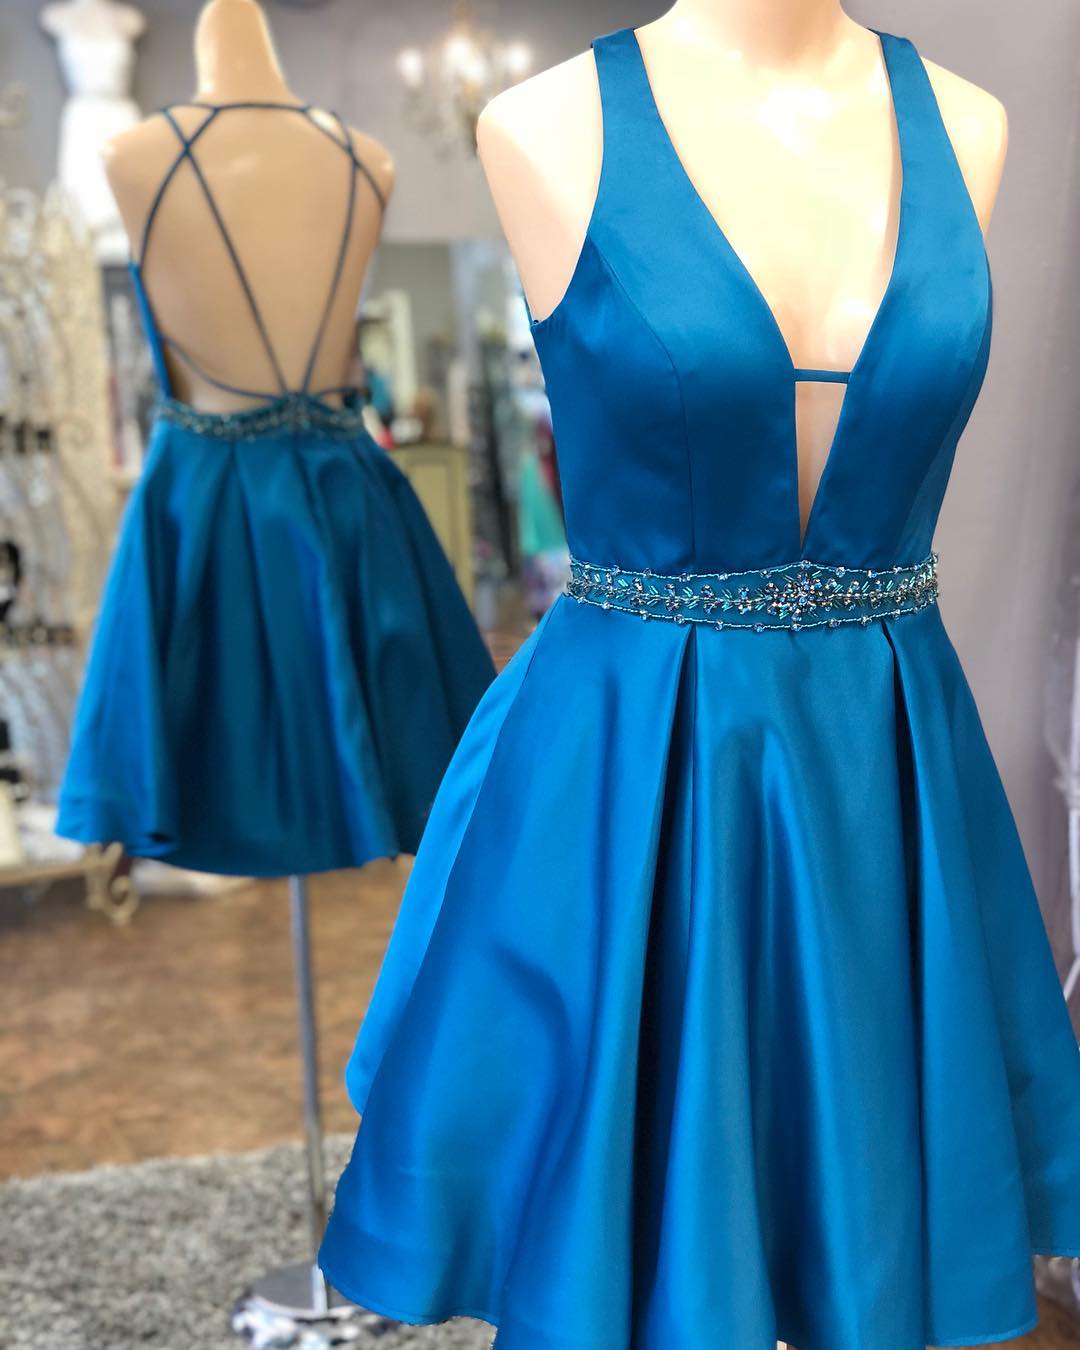 Sexy Blue Short Party Dress Cocktail Dress